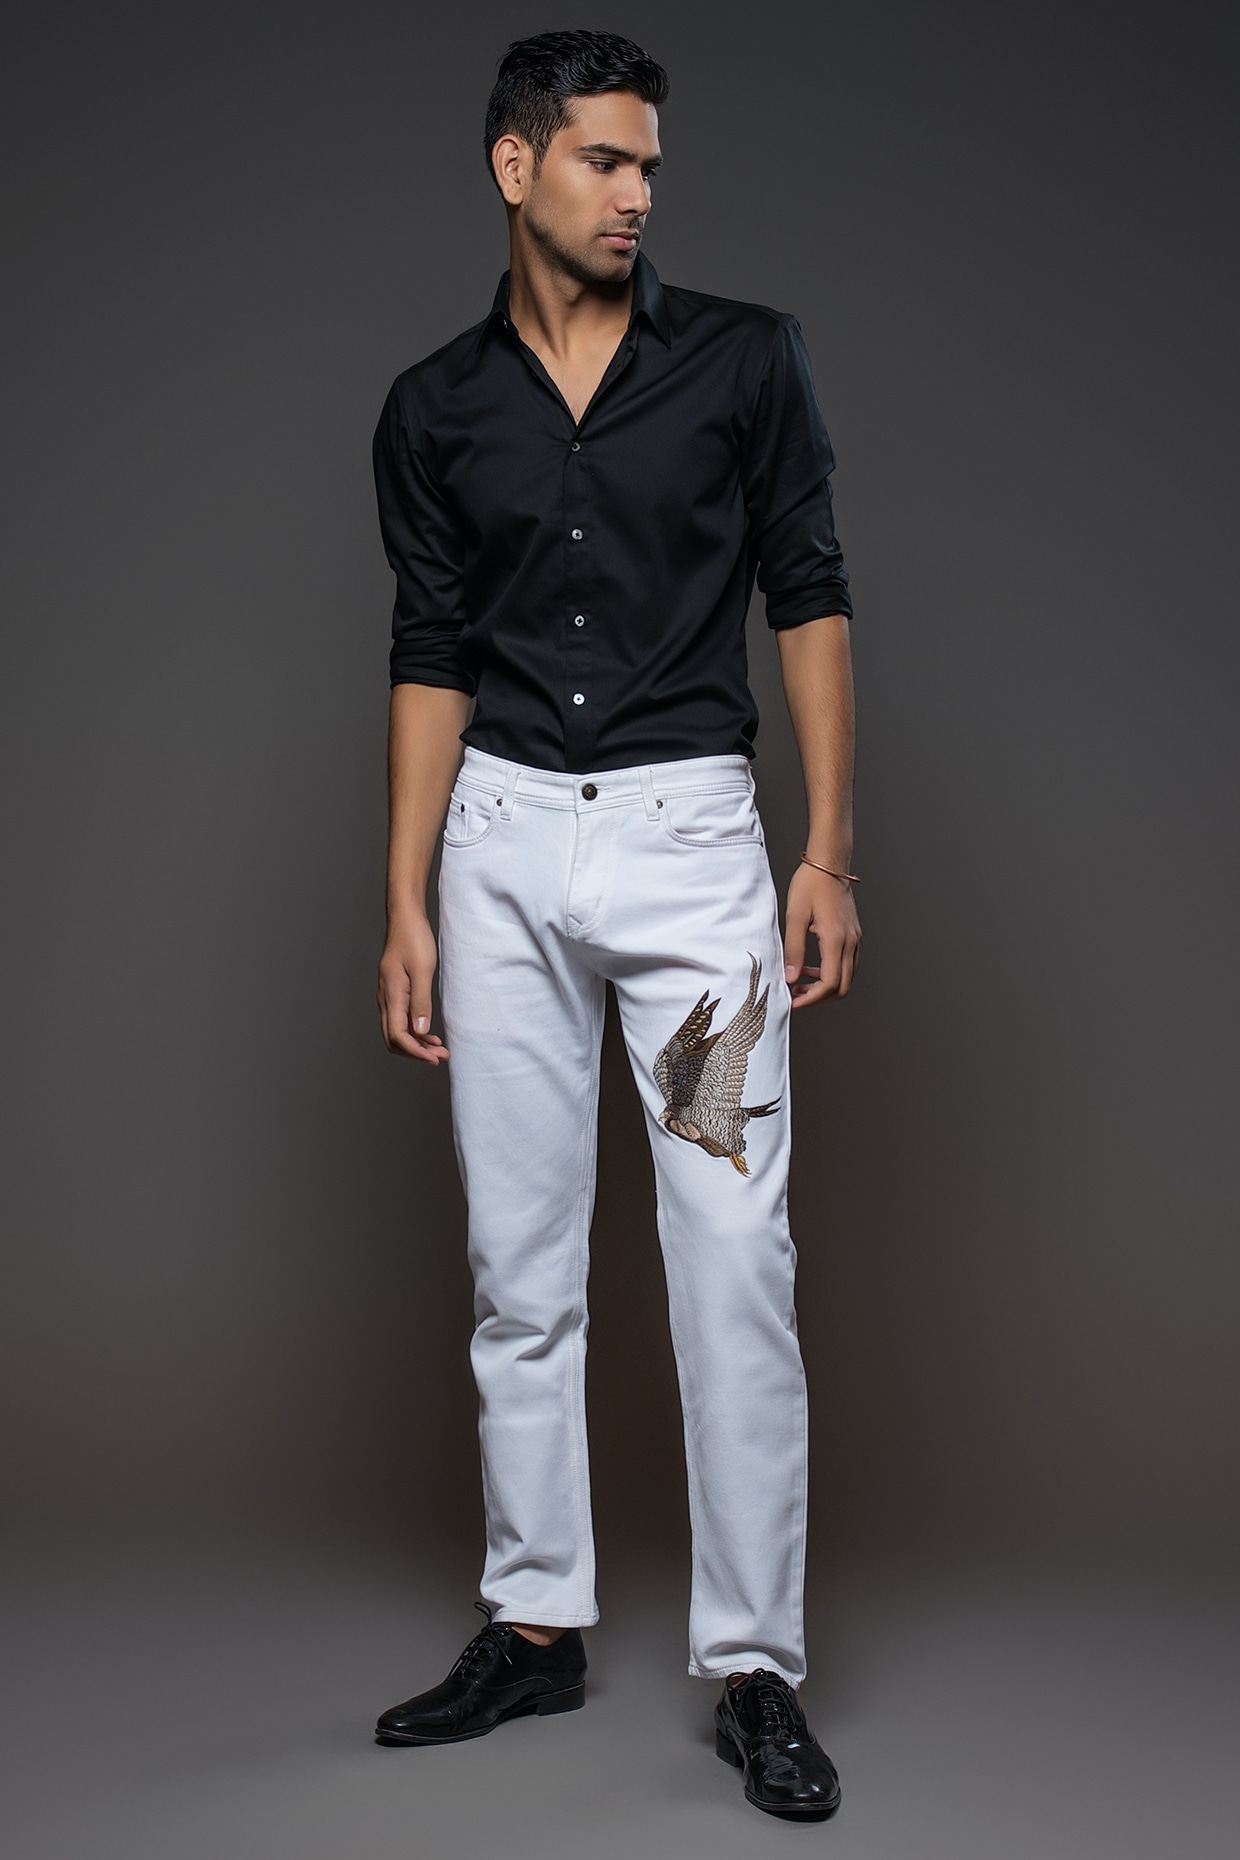 OFF-WHITE Arrow Denim Shirt 'Black/White' - OMYD027C99DEN0021001 | Solesense